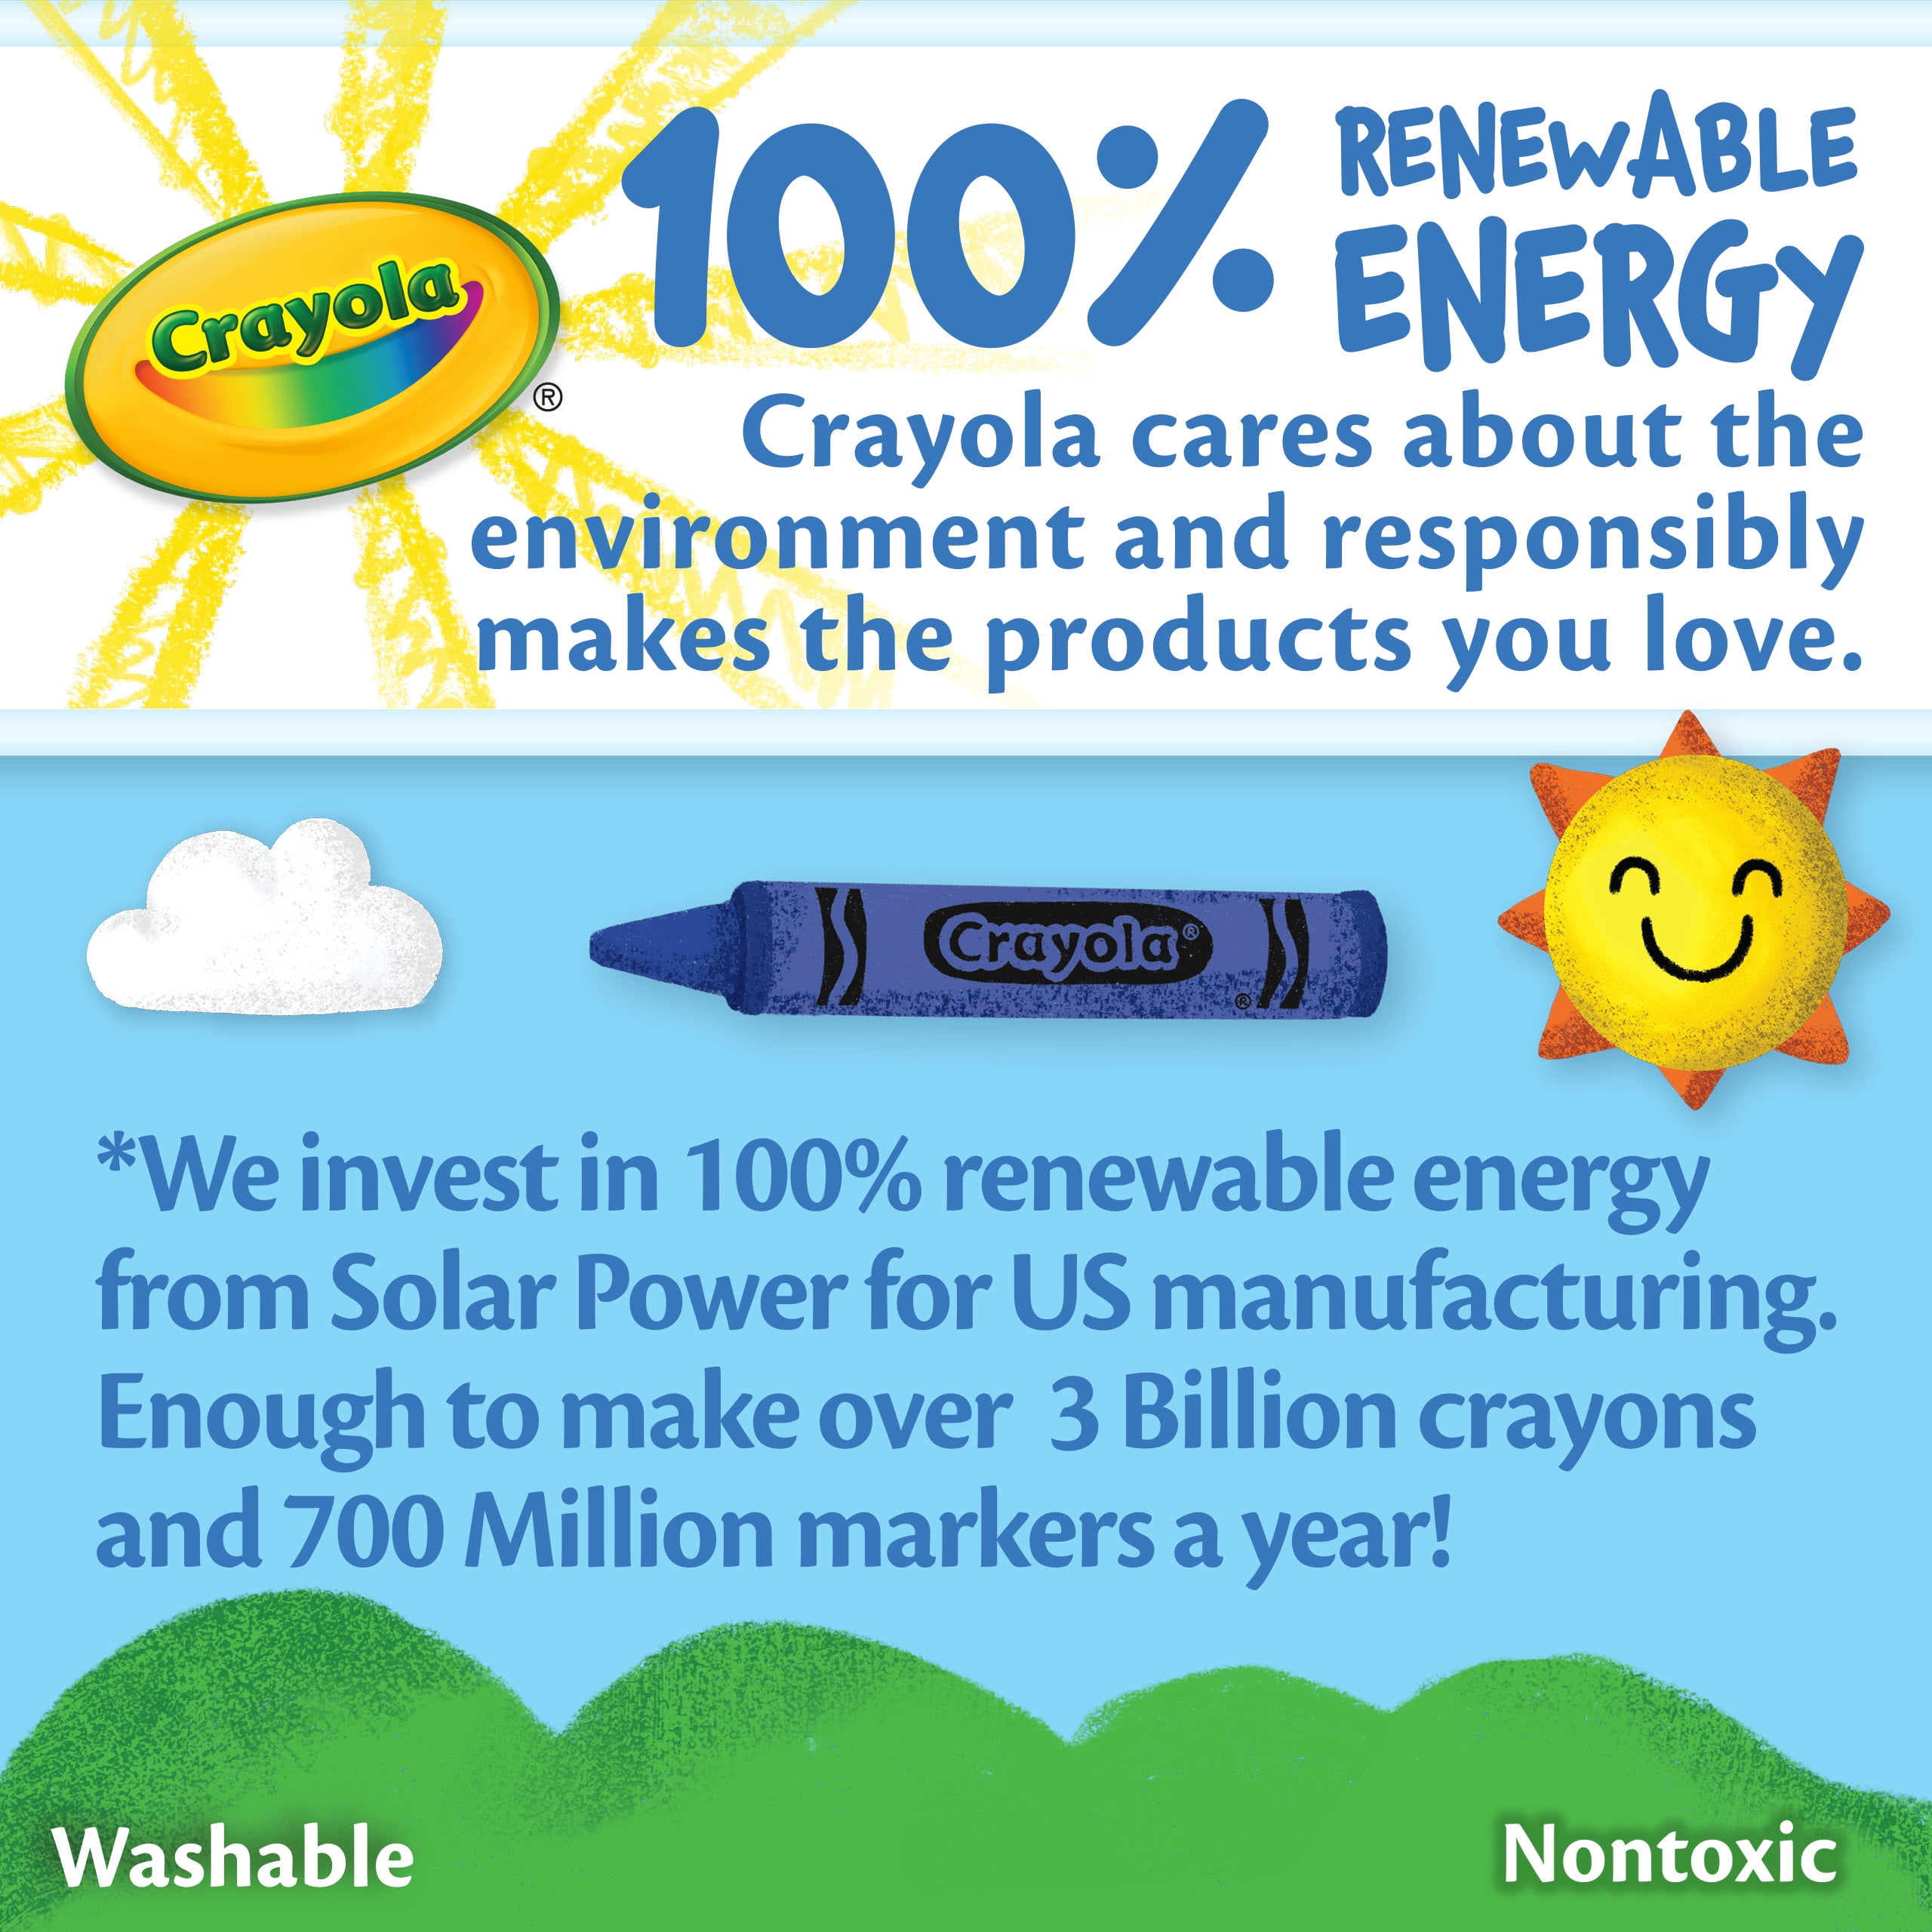 Crayola 24ct Ultra Clean Washable Crayons : Target